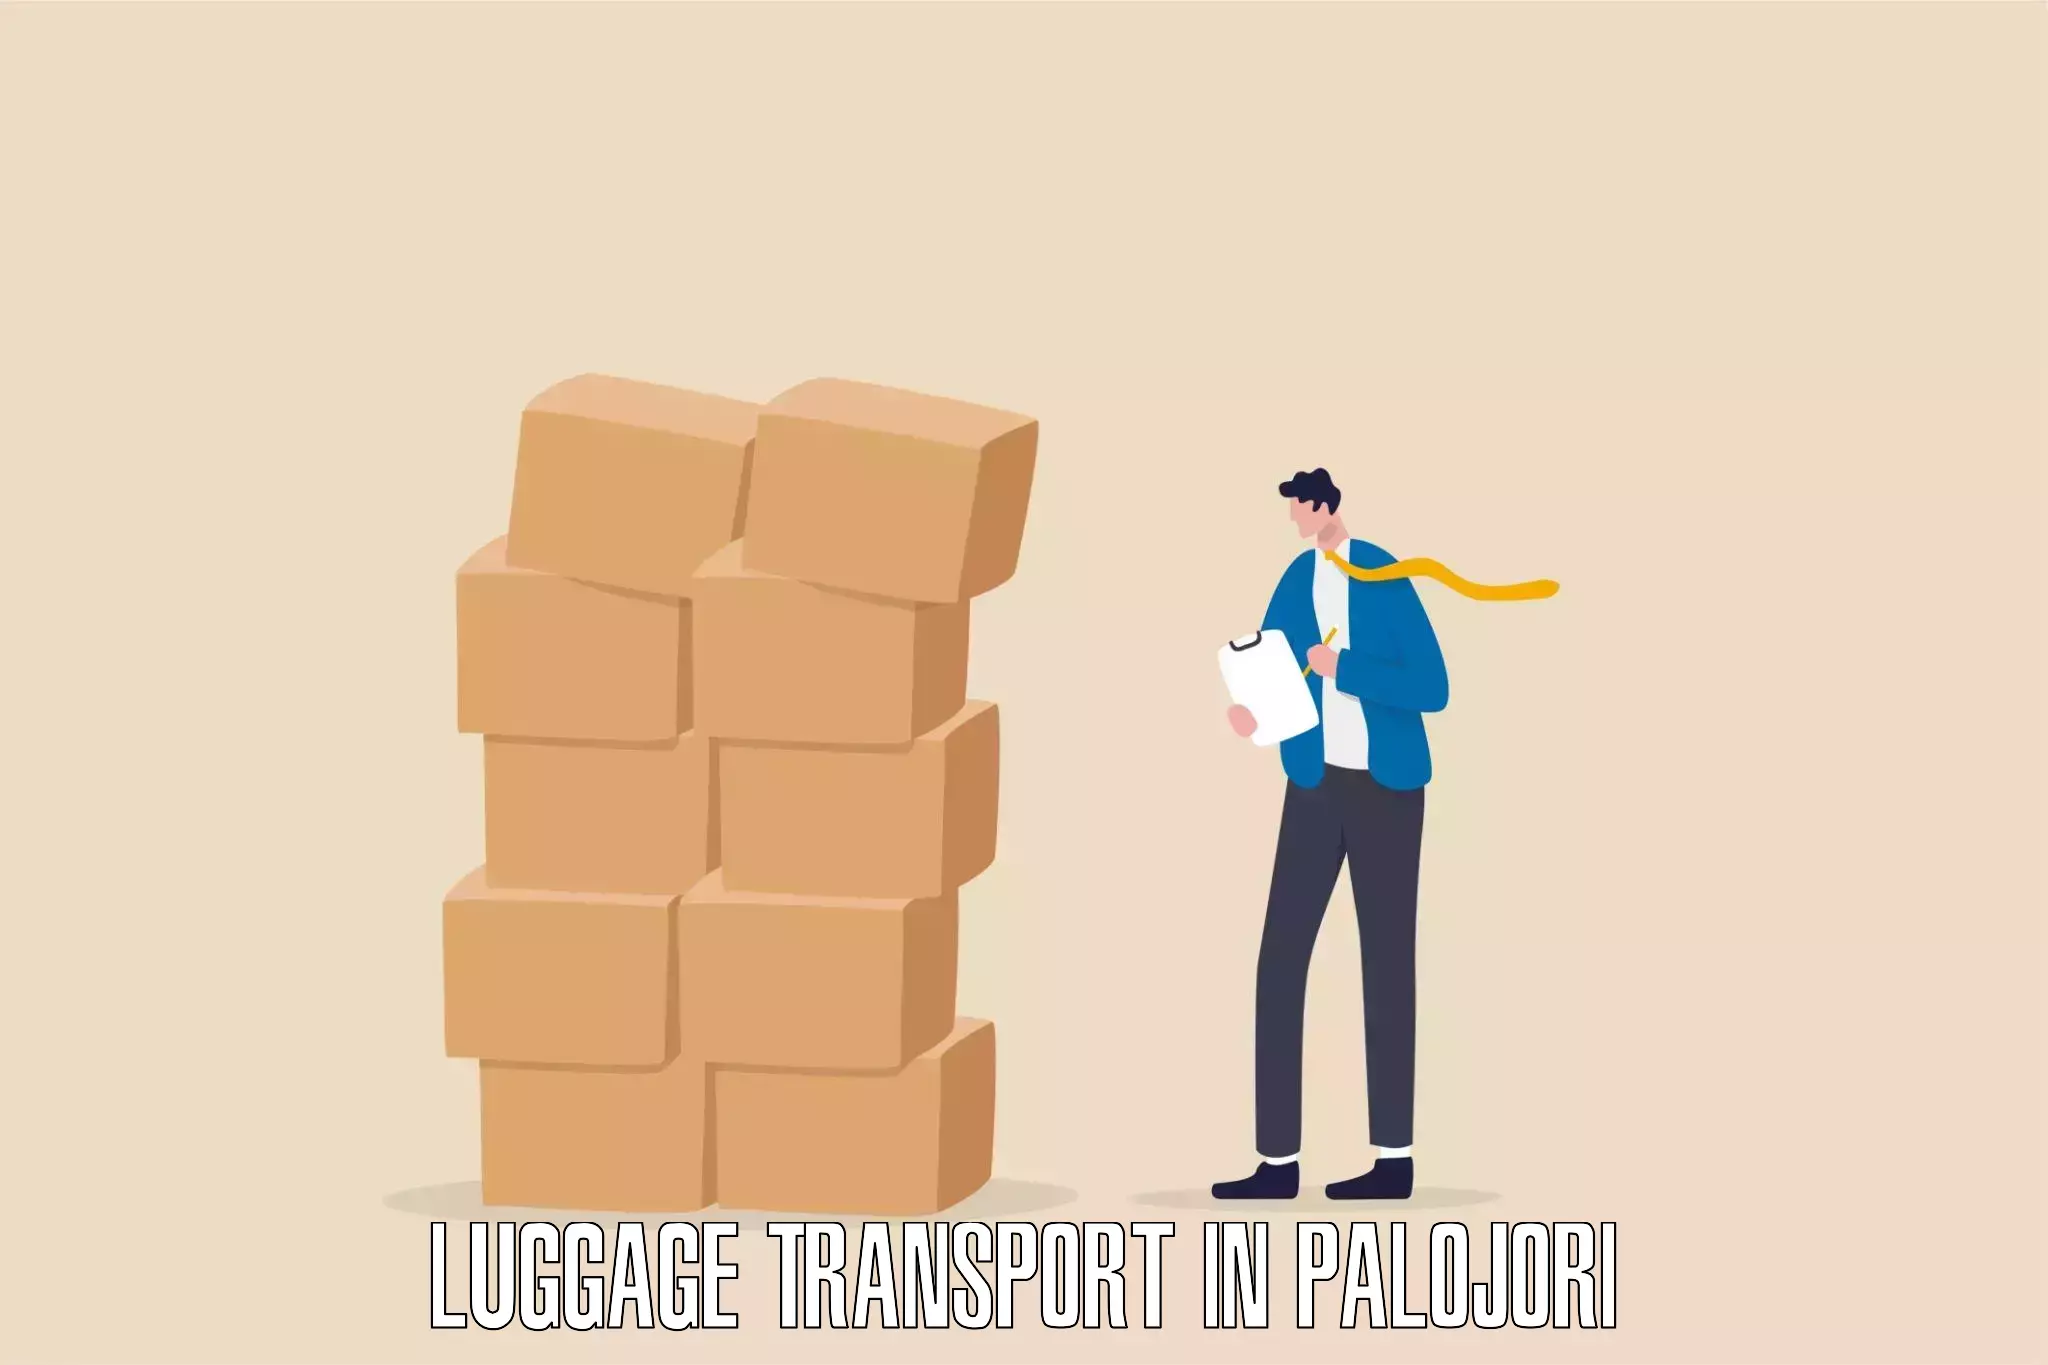 Baggage transport innovation in Palojori